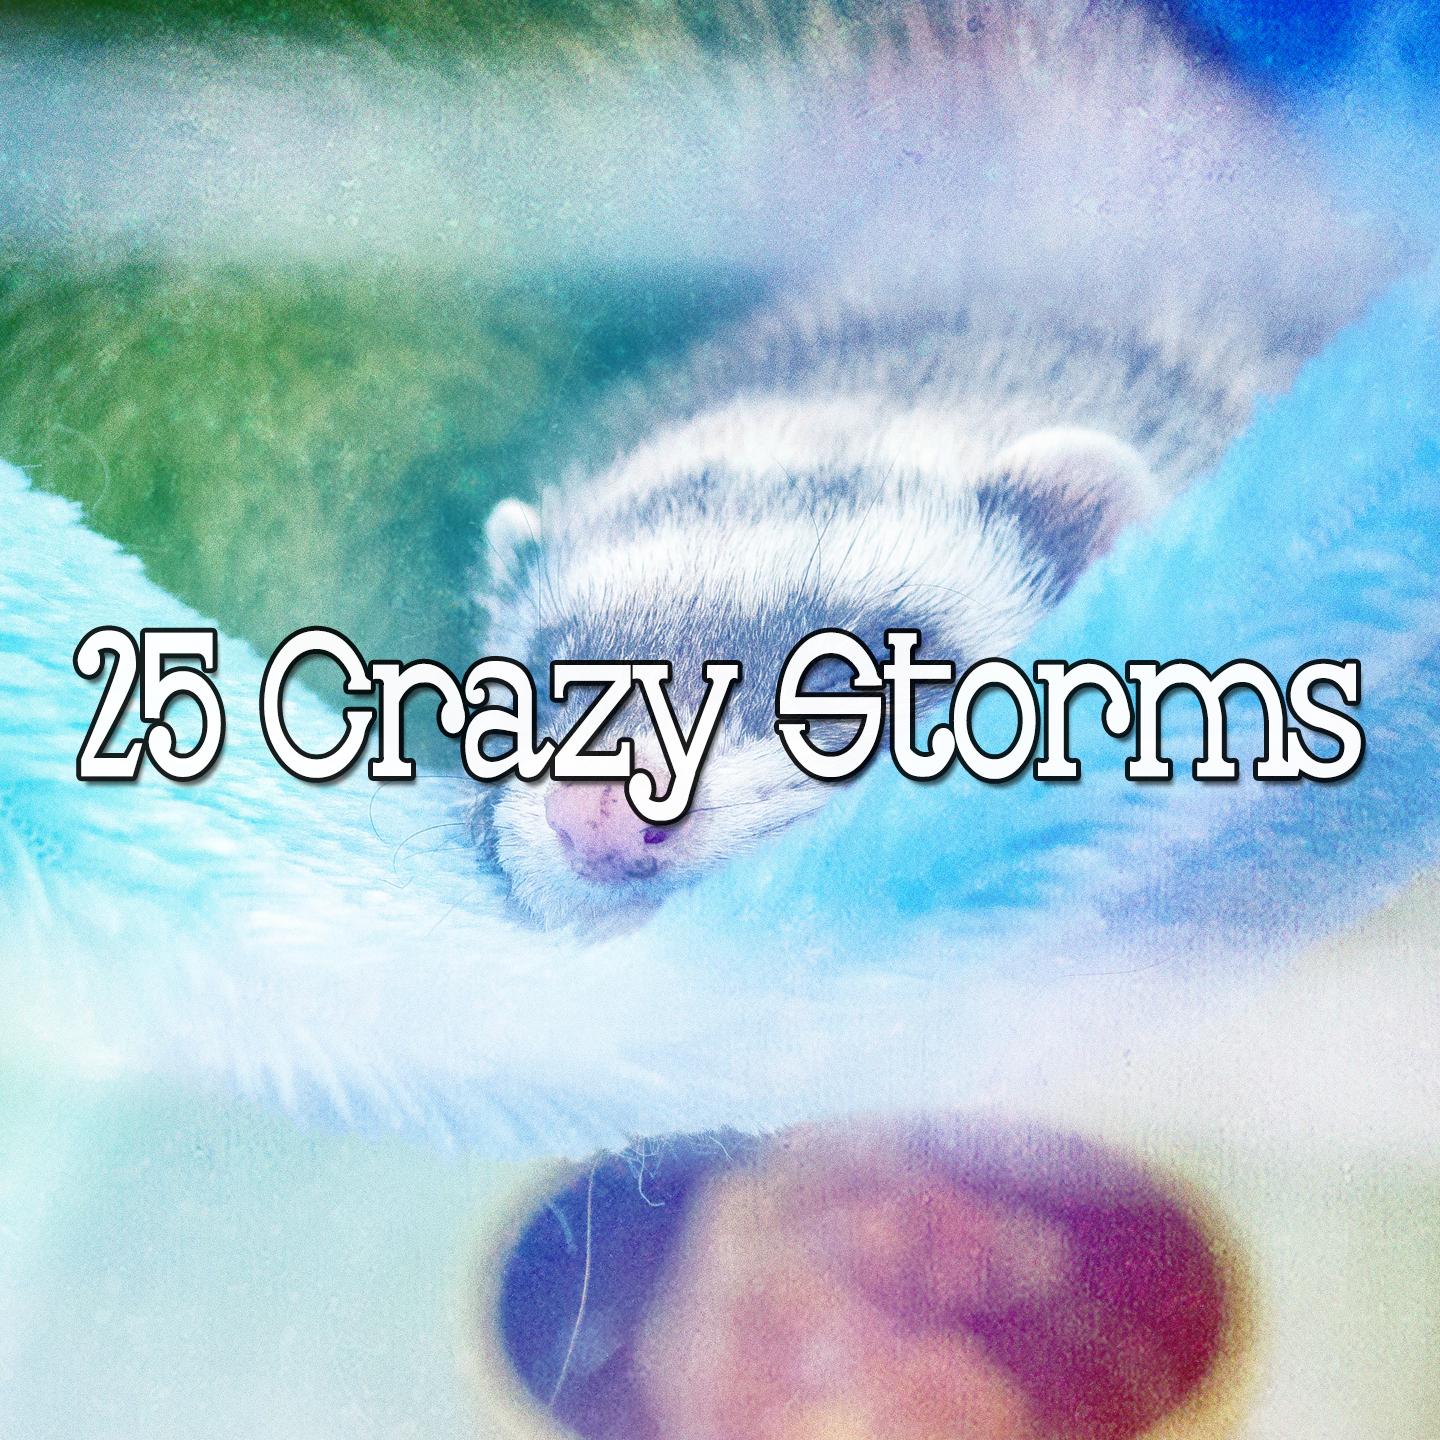 25 Crazy Storms